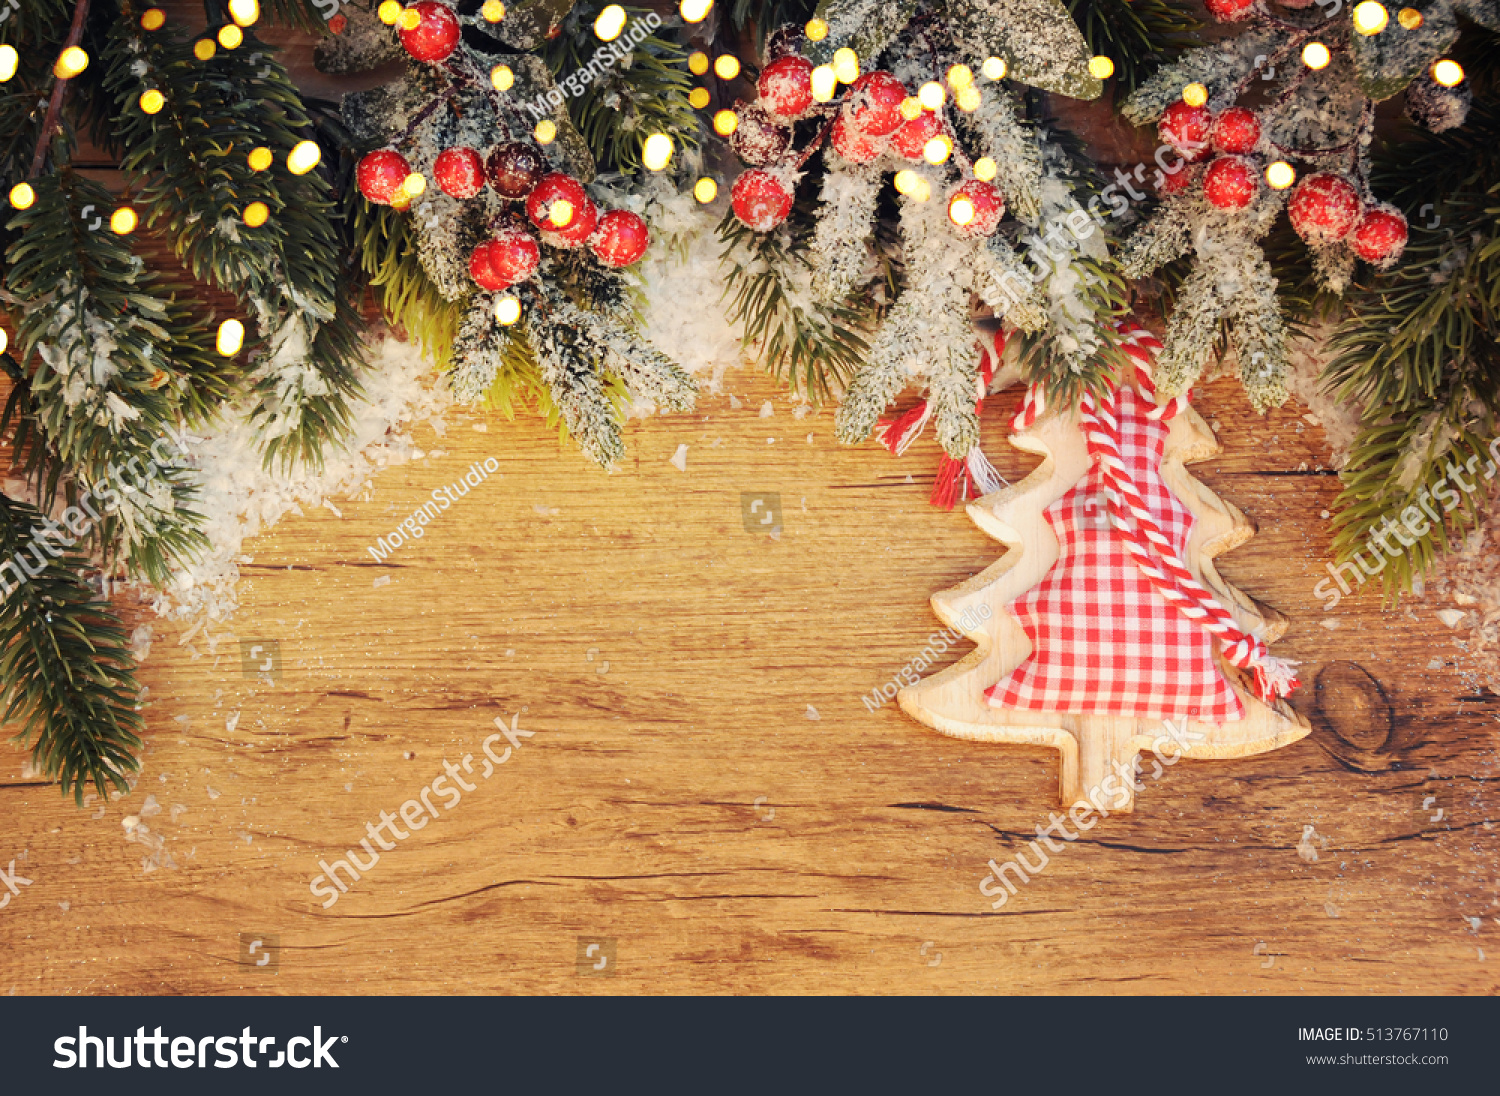 Christmas Wooden Background Stock Photo 513767110 : Shutterstock